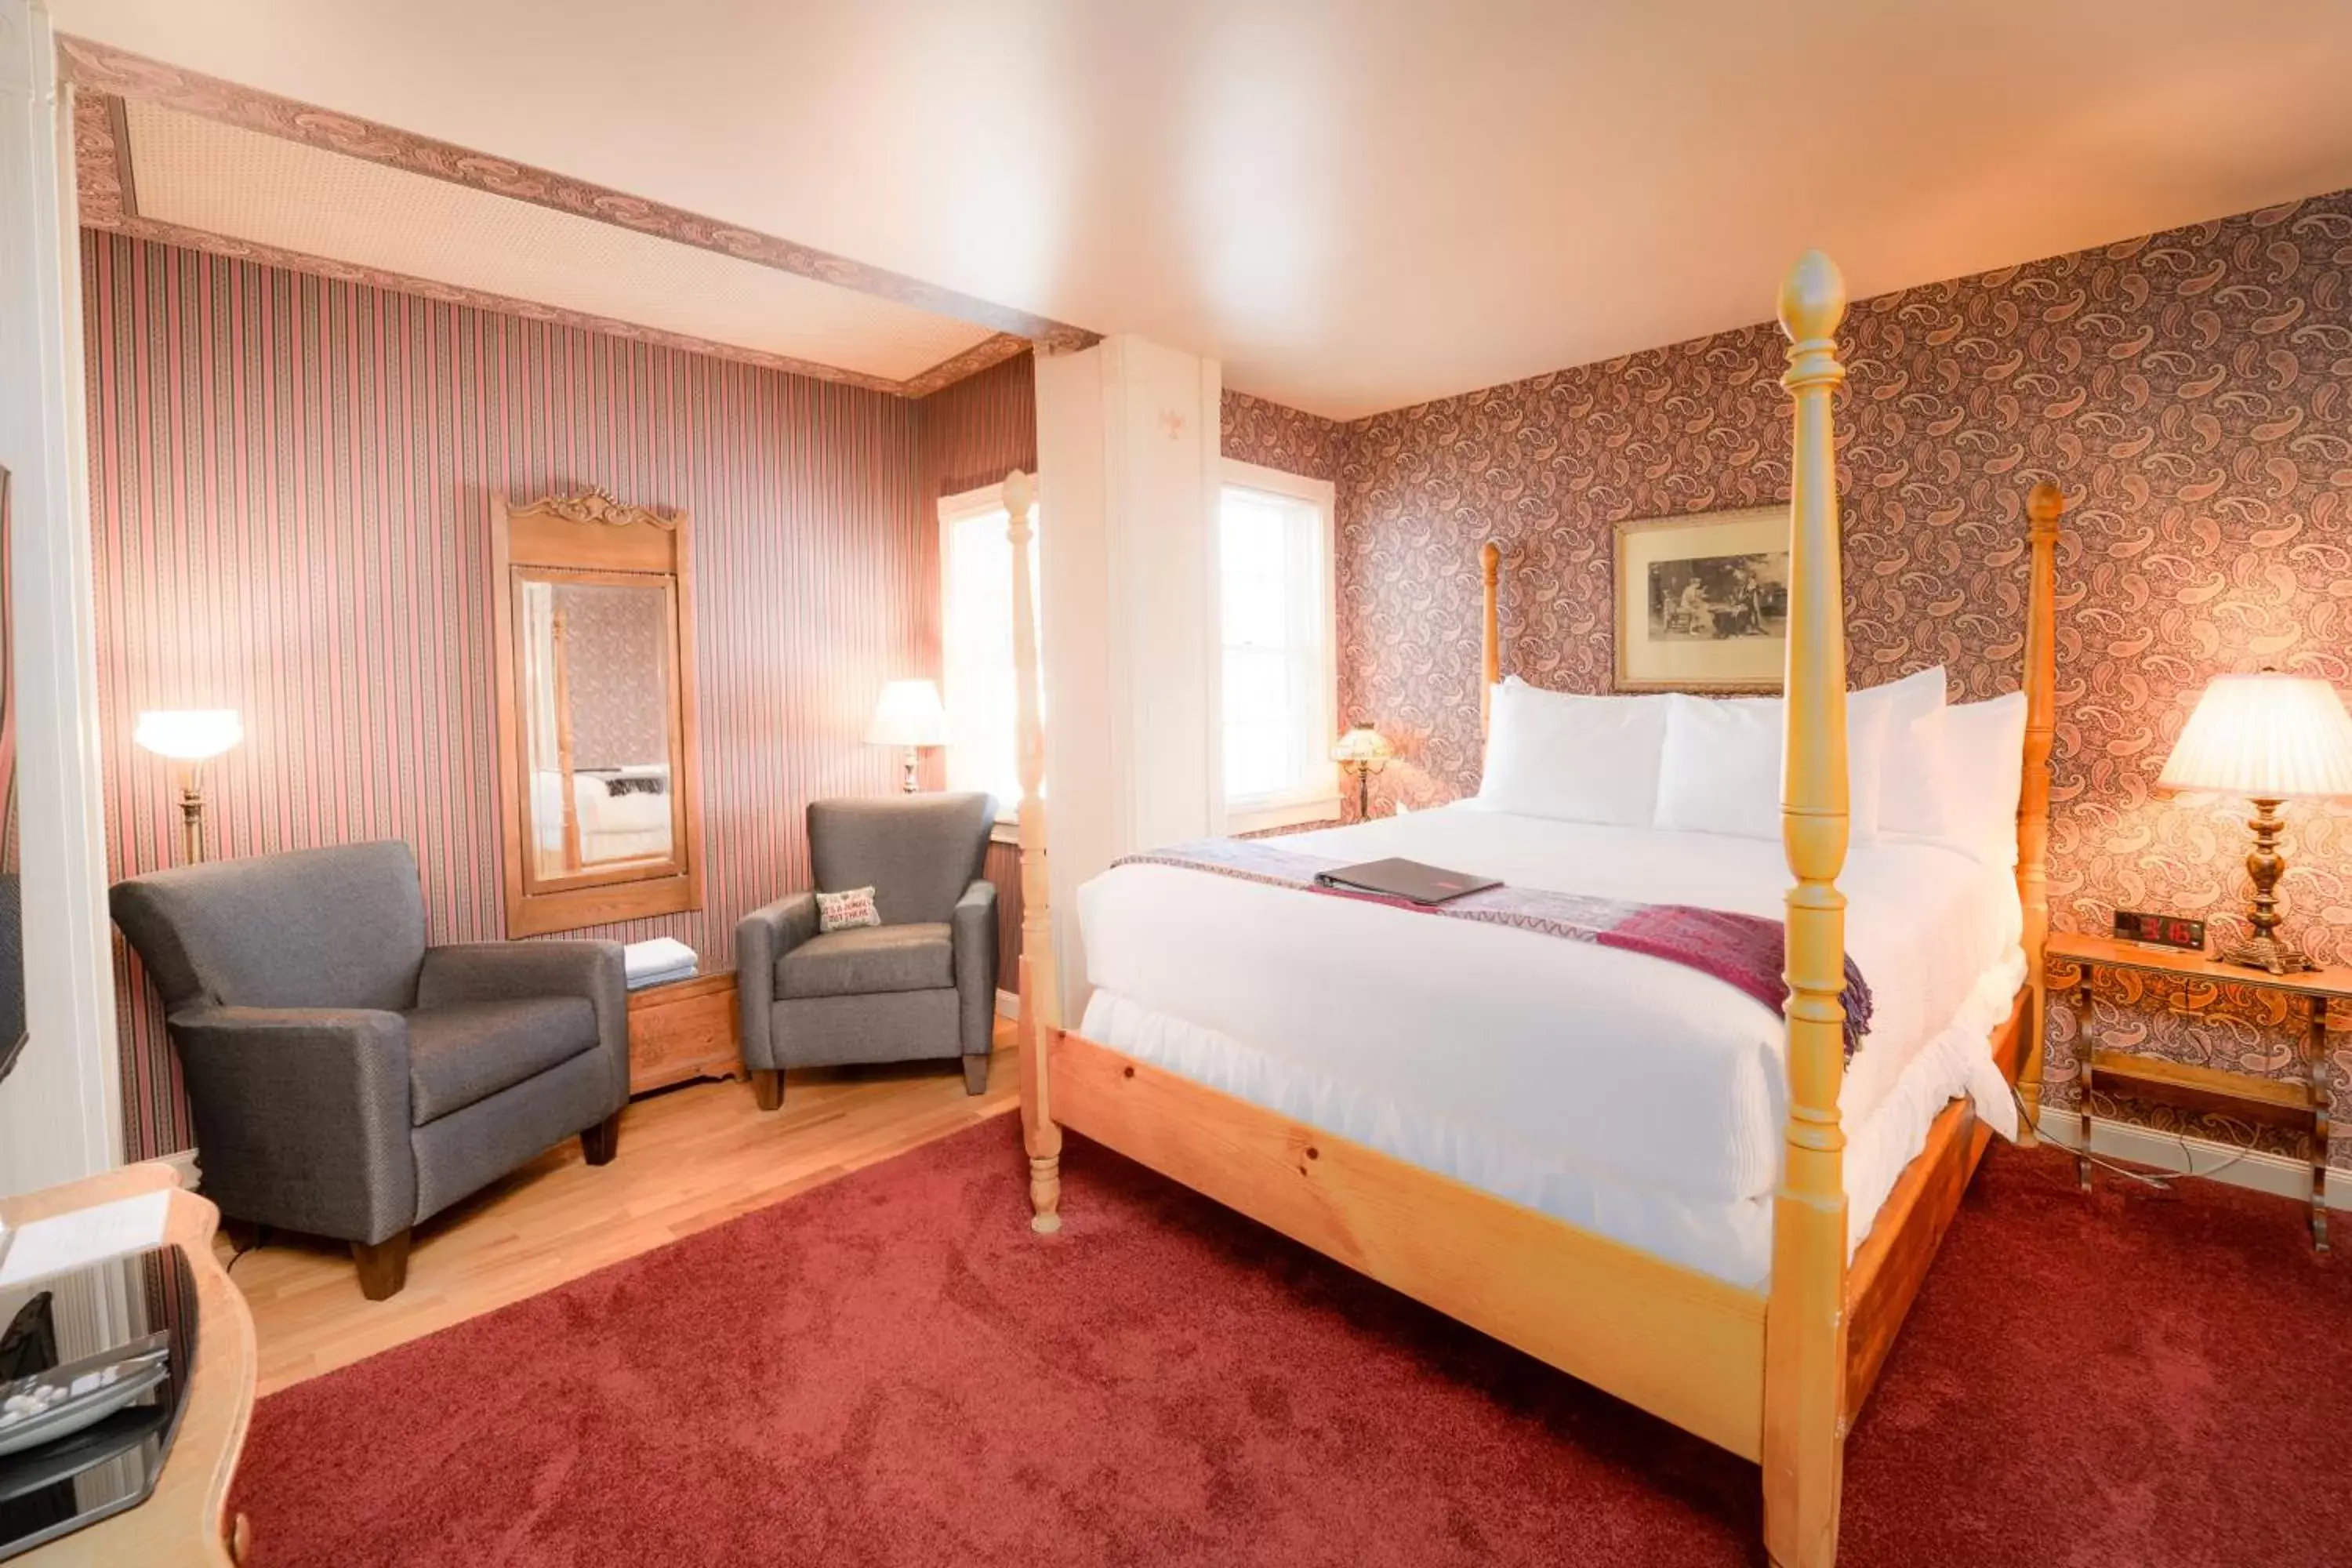 Queen Room in Yelton Manor Bed and Breakfast